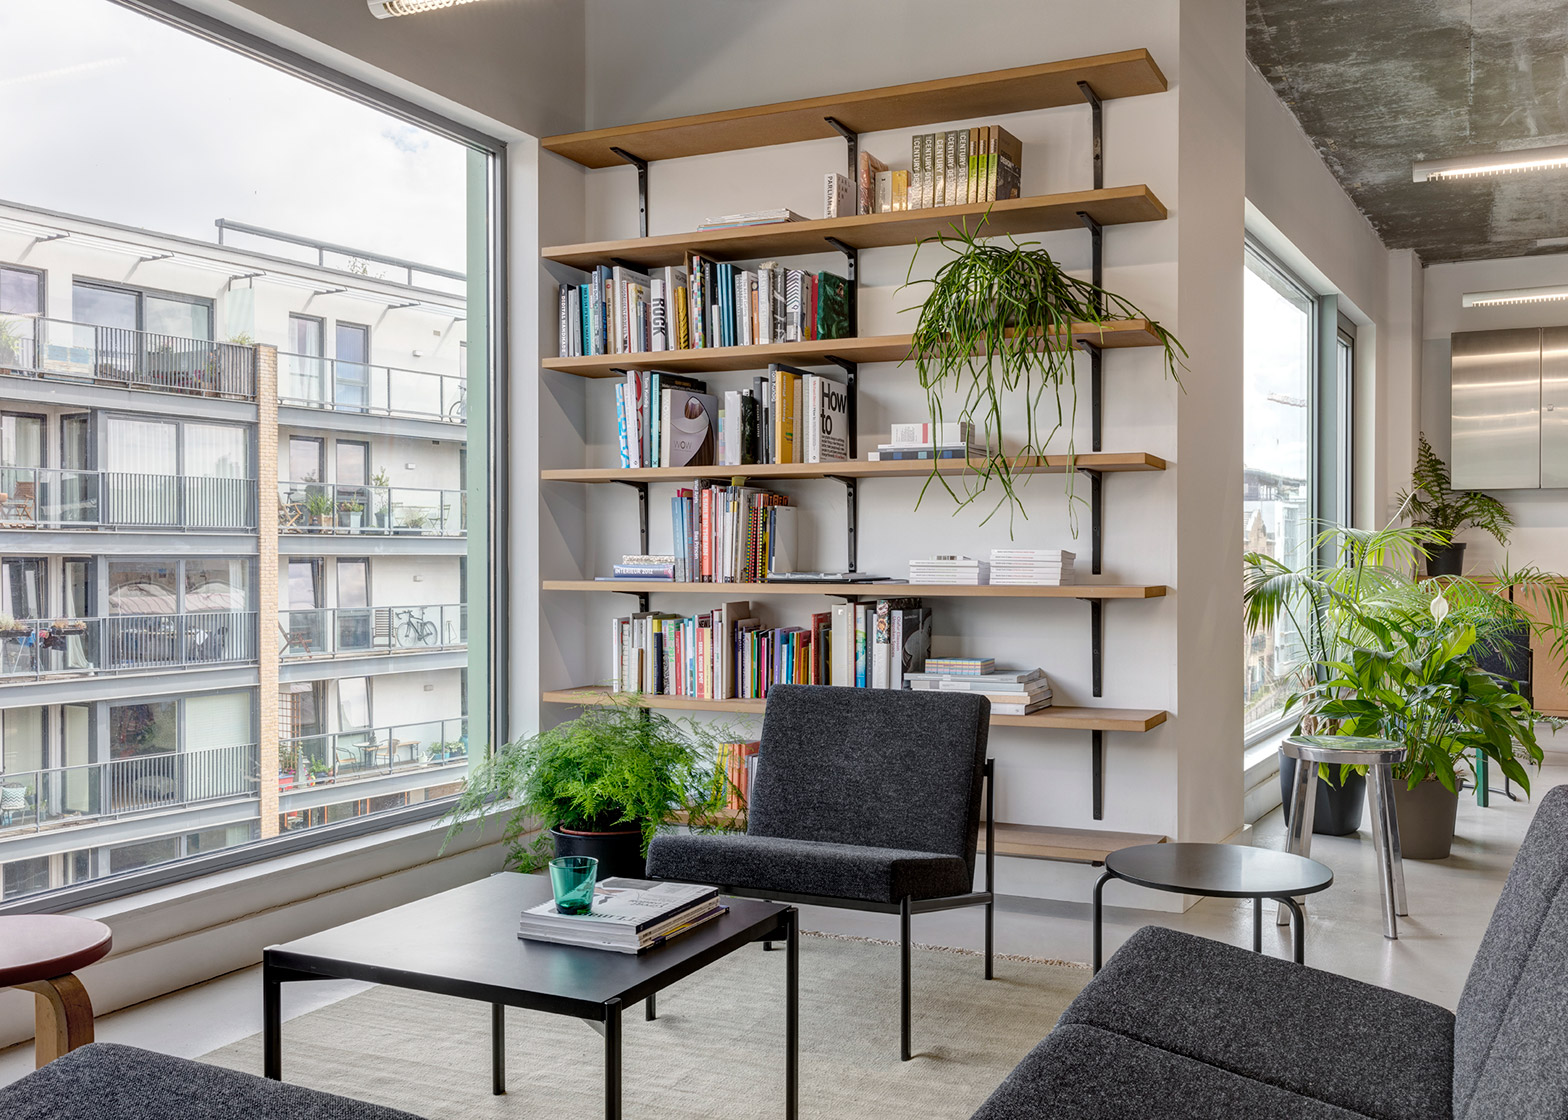 dezeen-office-pernilla-ohrstedt-interior-design-work-space-hoxton-london-shilouette-tables_dezeen_1568_15.jpg